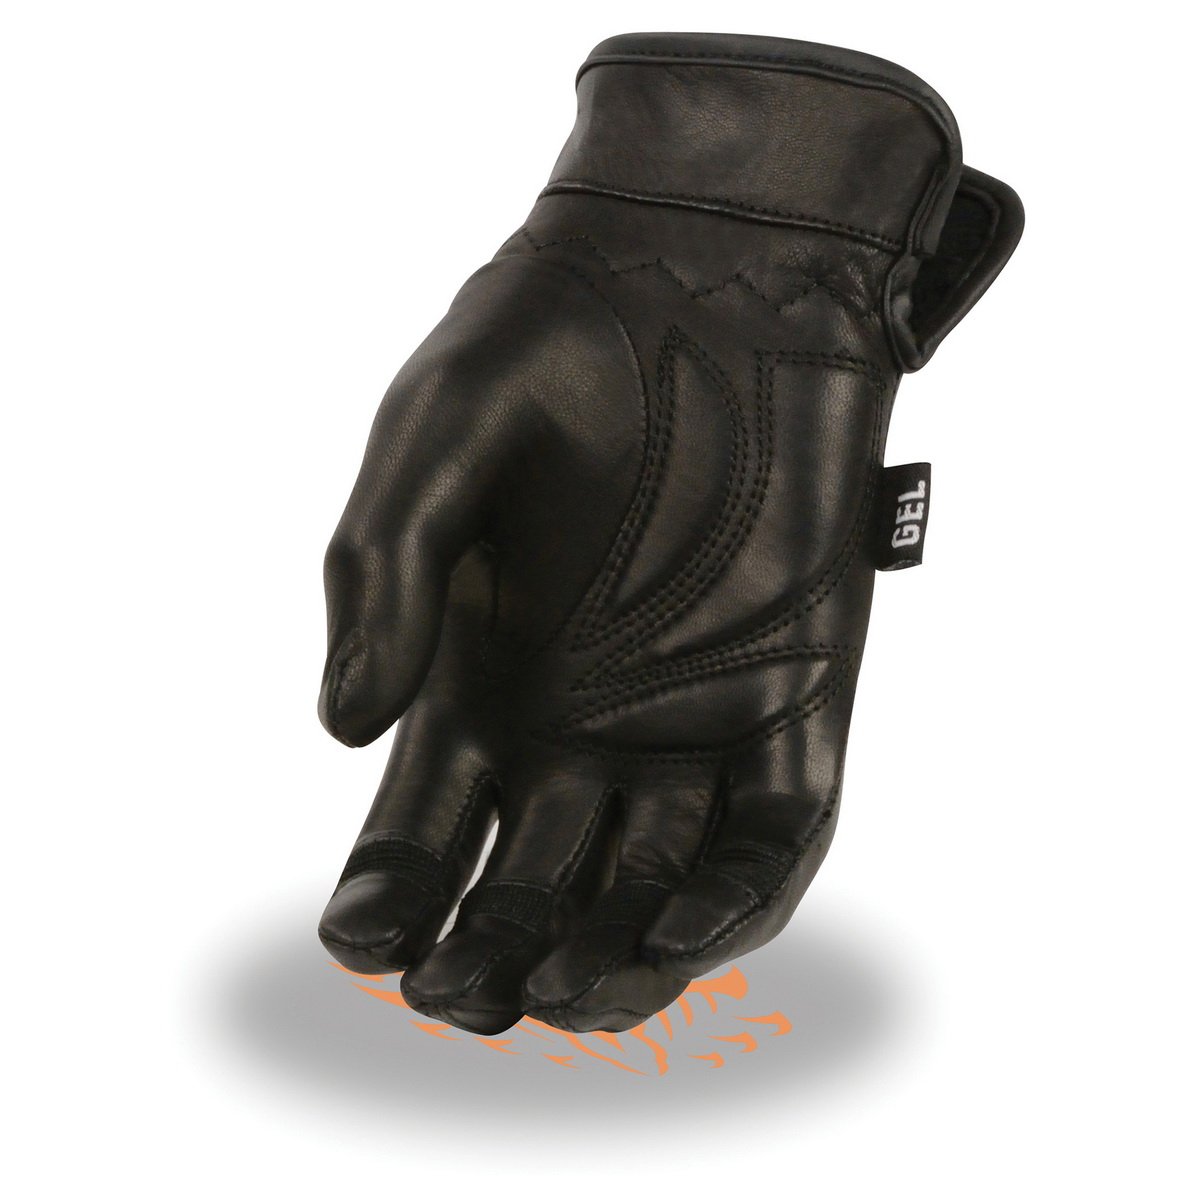 Xelement XG7700 Women's Black Leather Gel Palm Lightweight Motorcycle Hand Gloves W/ Open Wrist Expansion